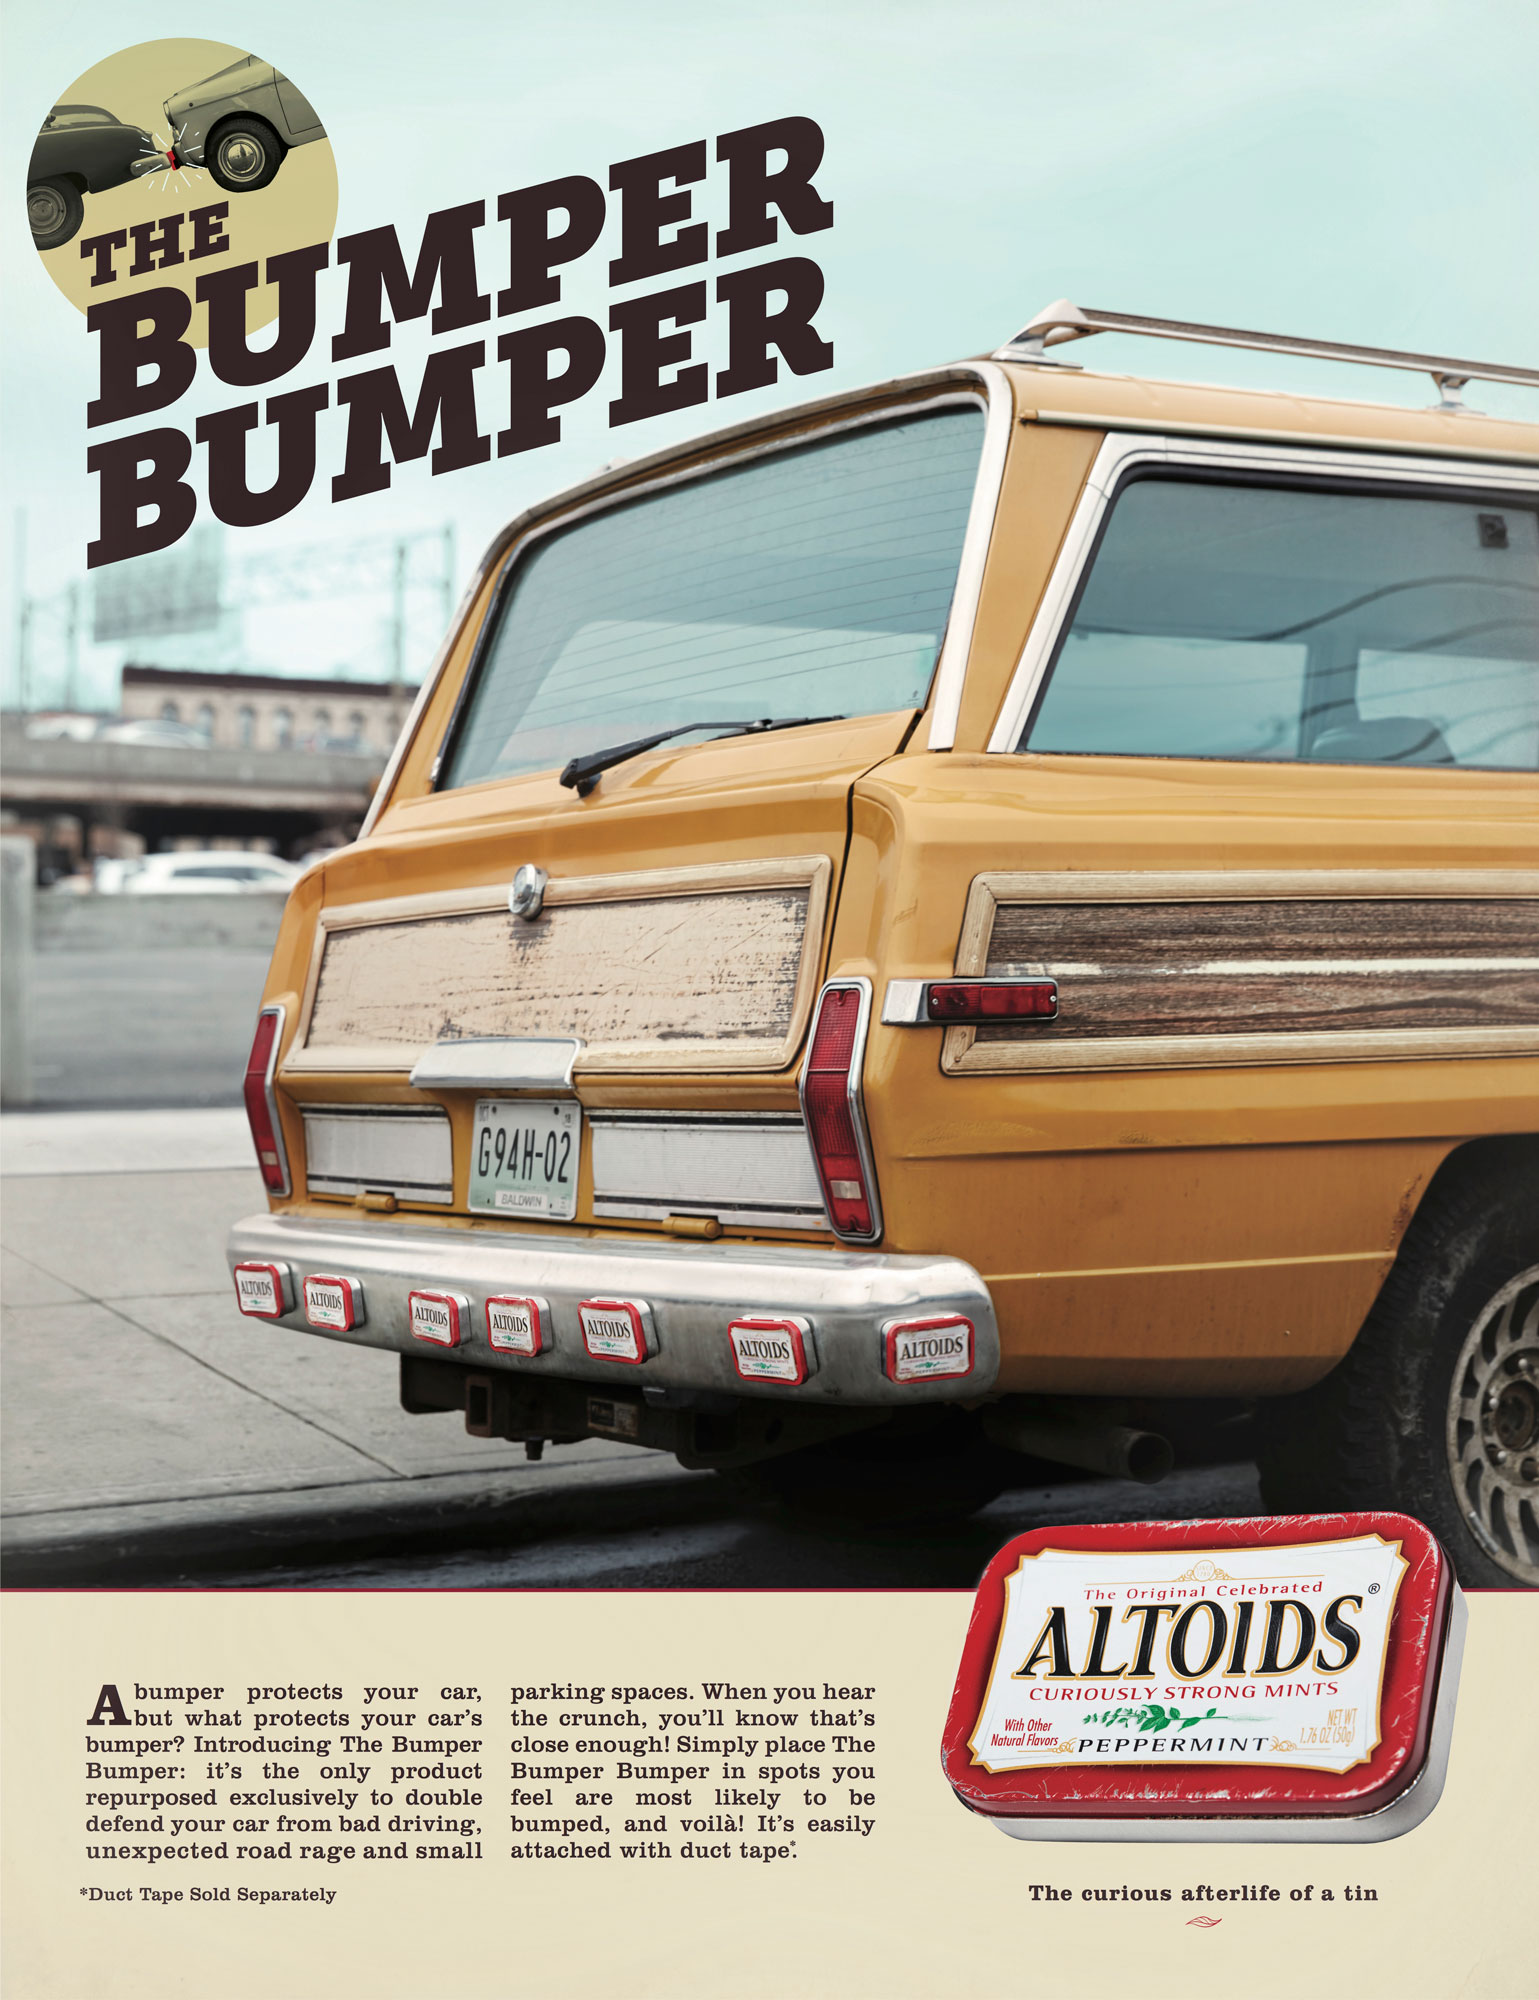 Altoids - Bumper Bumper